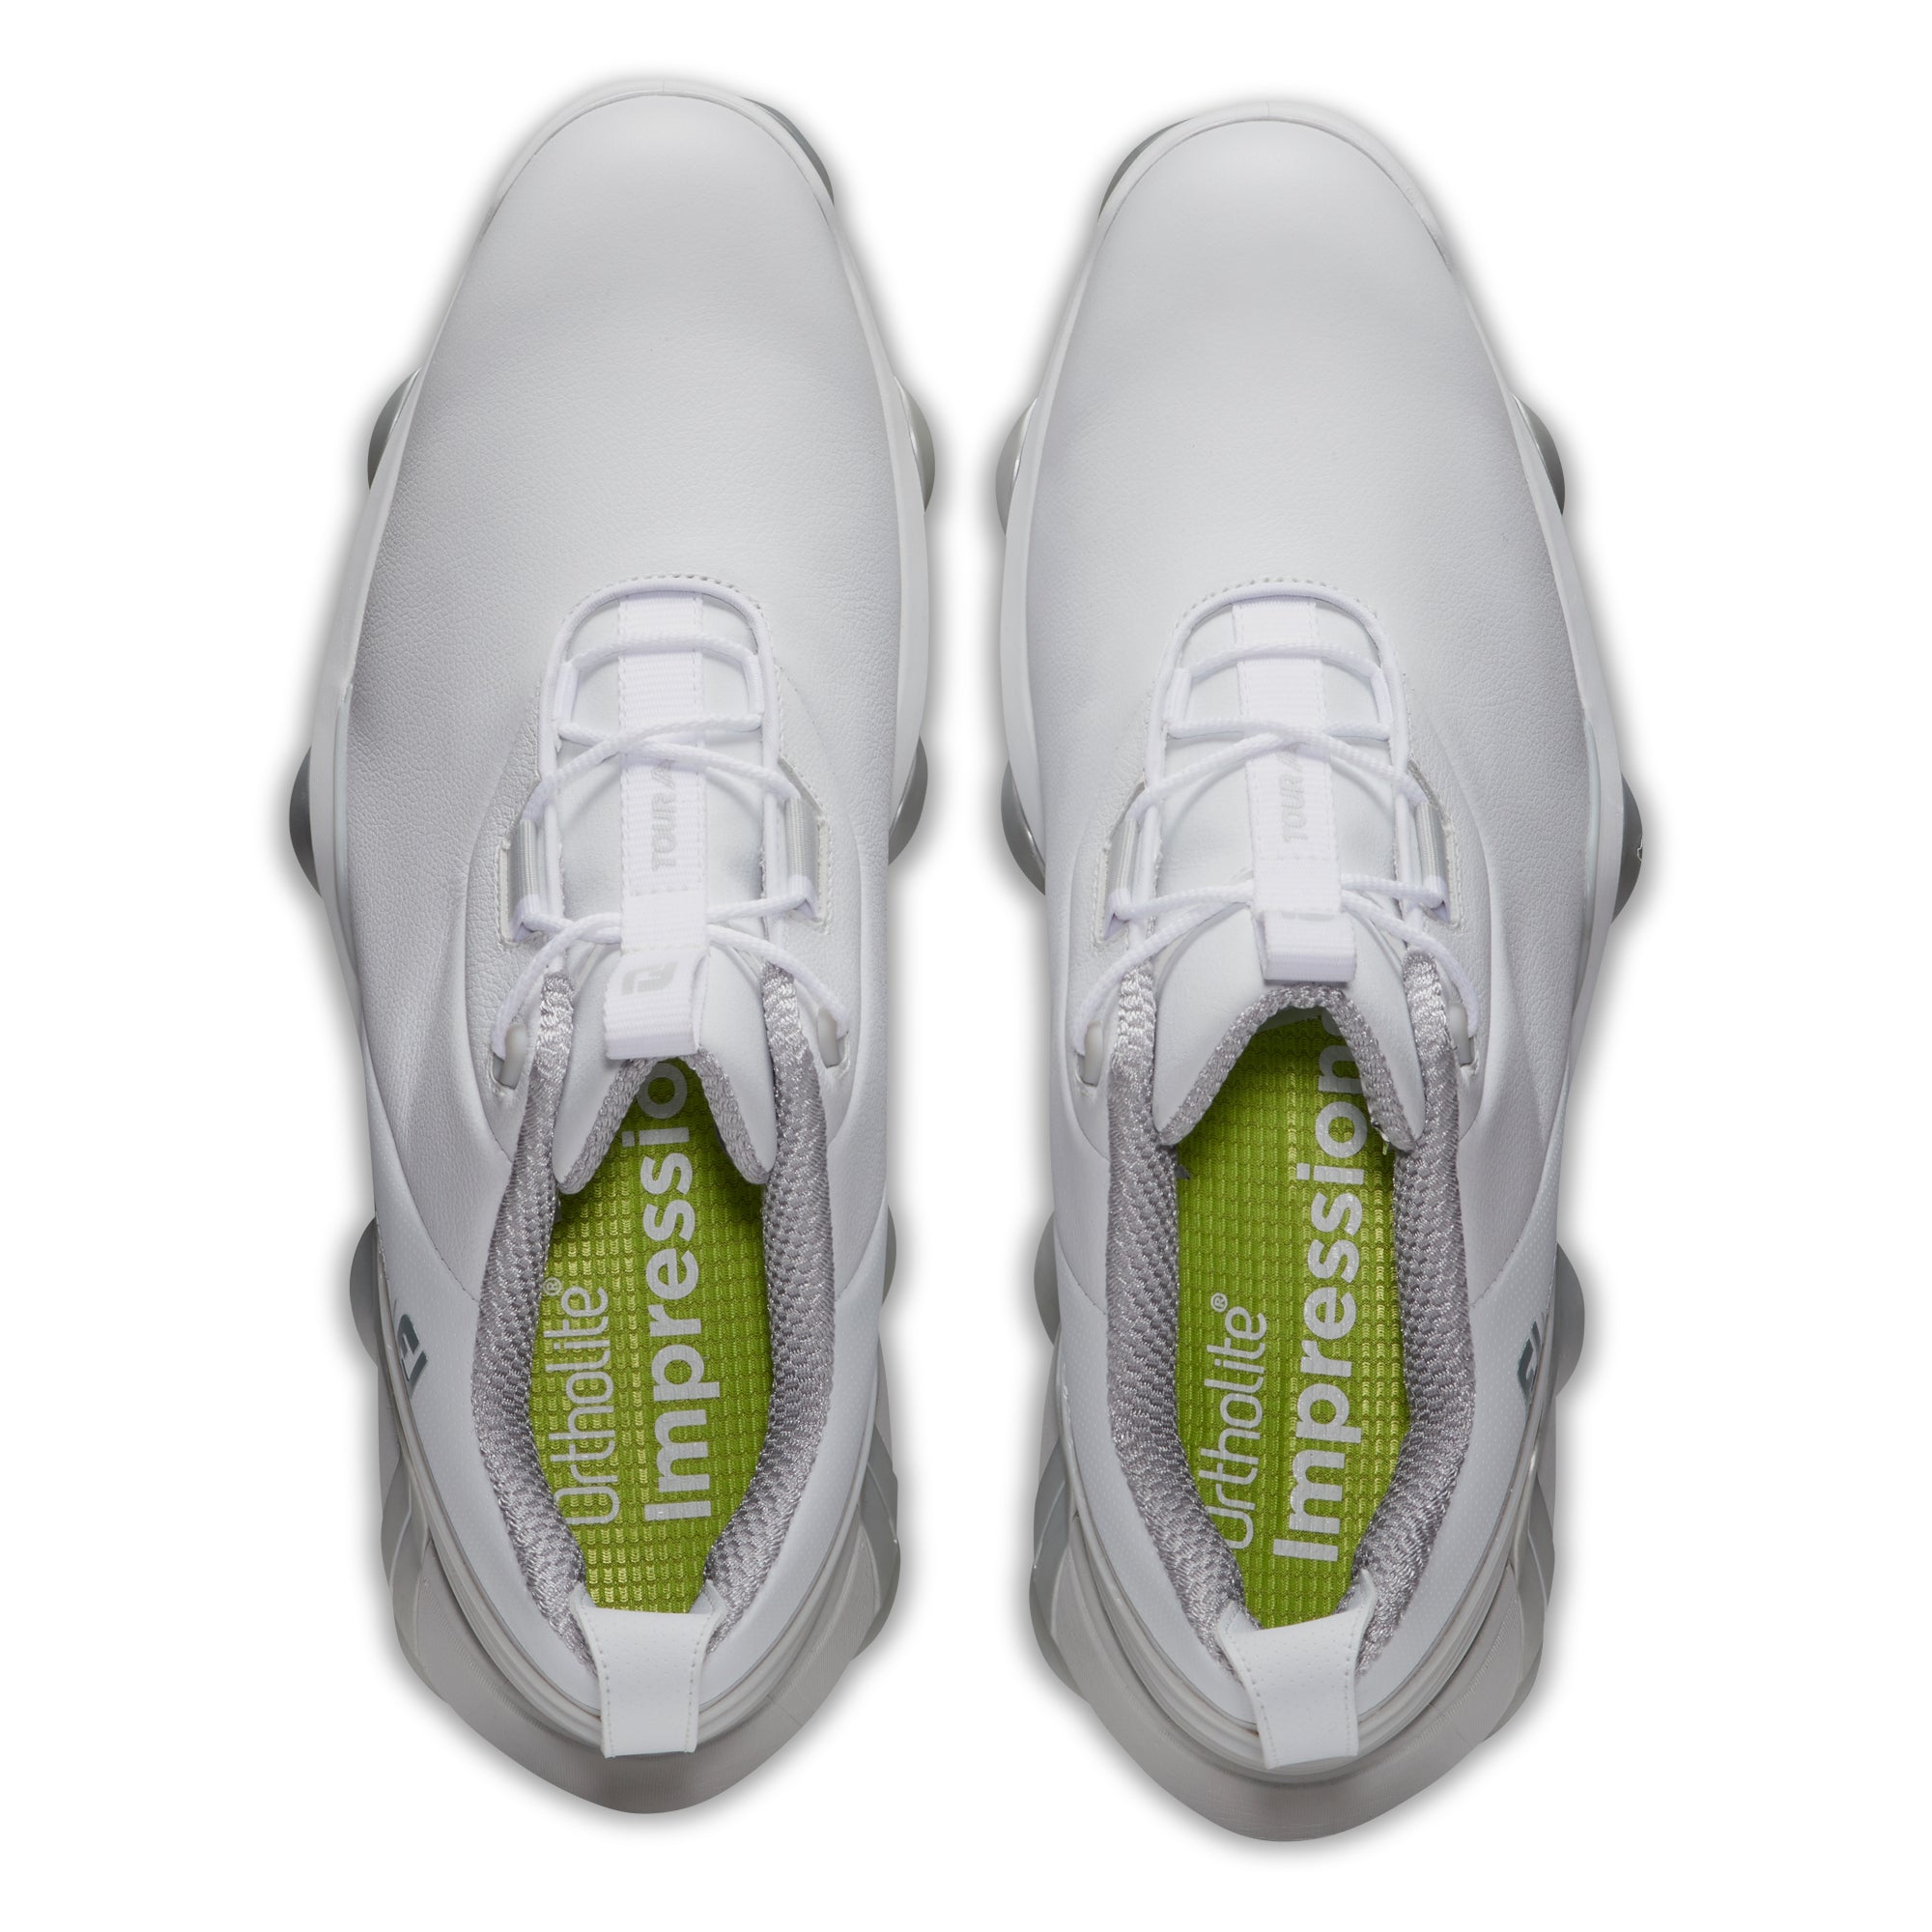 footjoy-tour-alpha-golf-shoes-55505-white-grey-lime